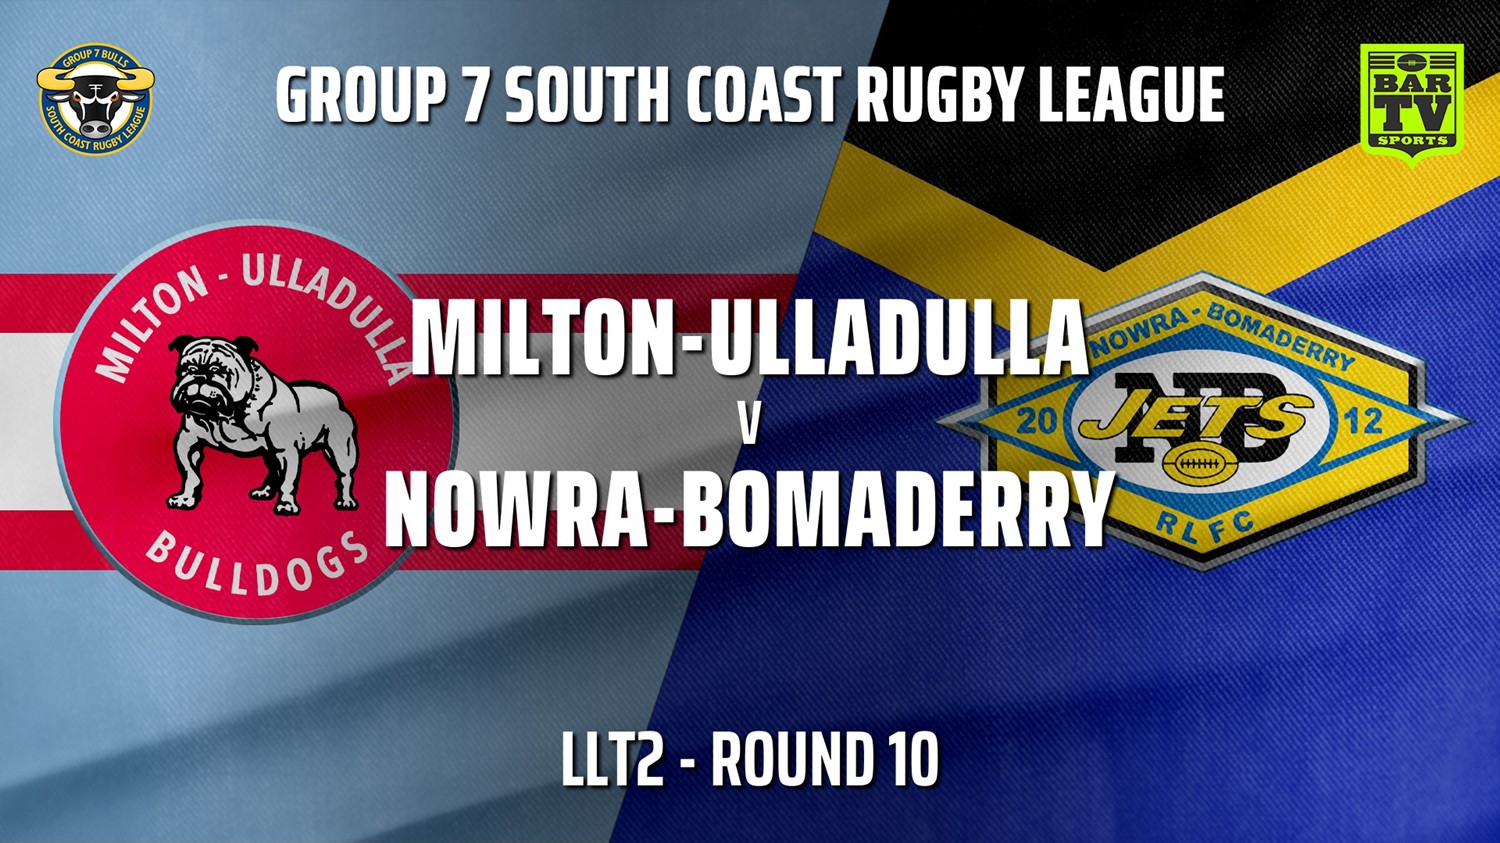 210620-South Coast Round 10 - LLT2 - Milton-Ulladulla Bulldogs v Nowra-Bomaderry  Slate Image